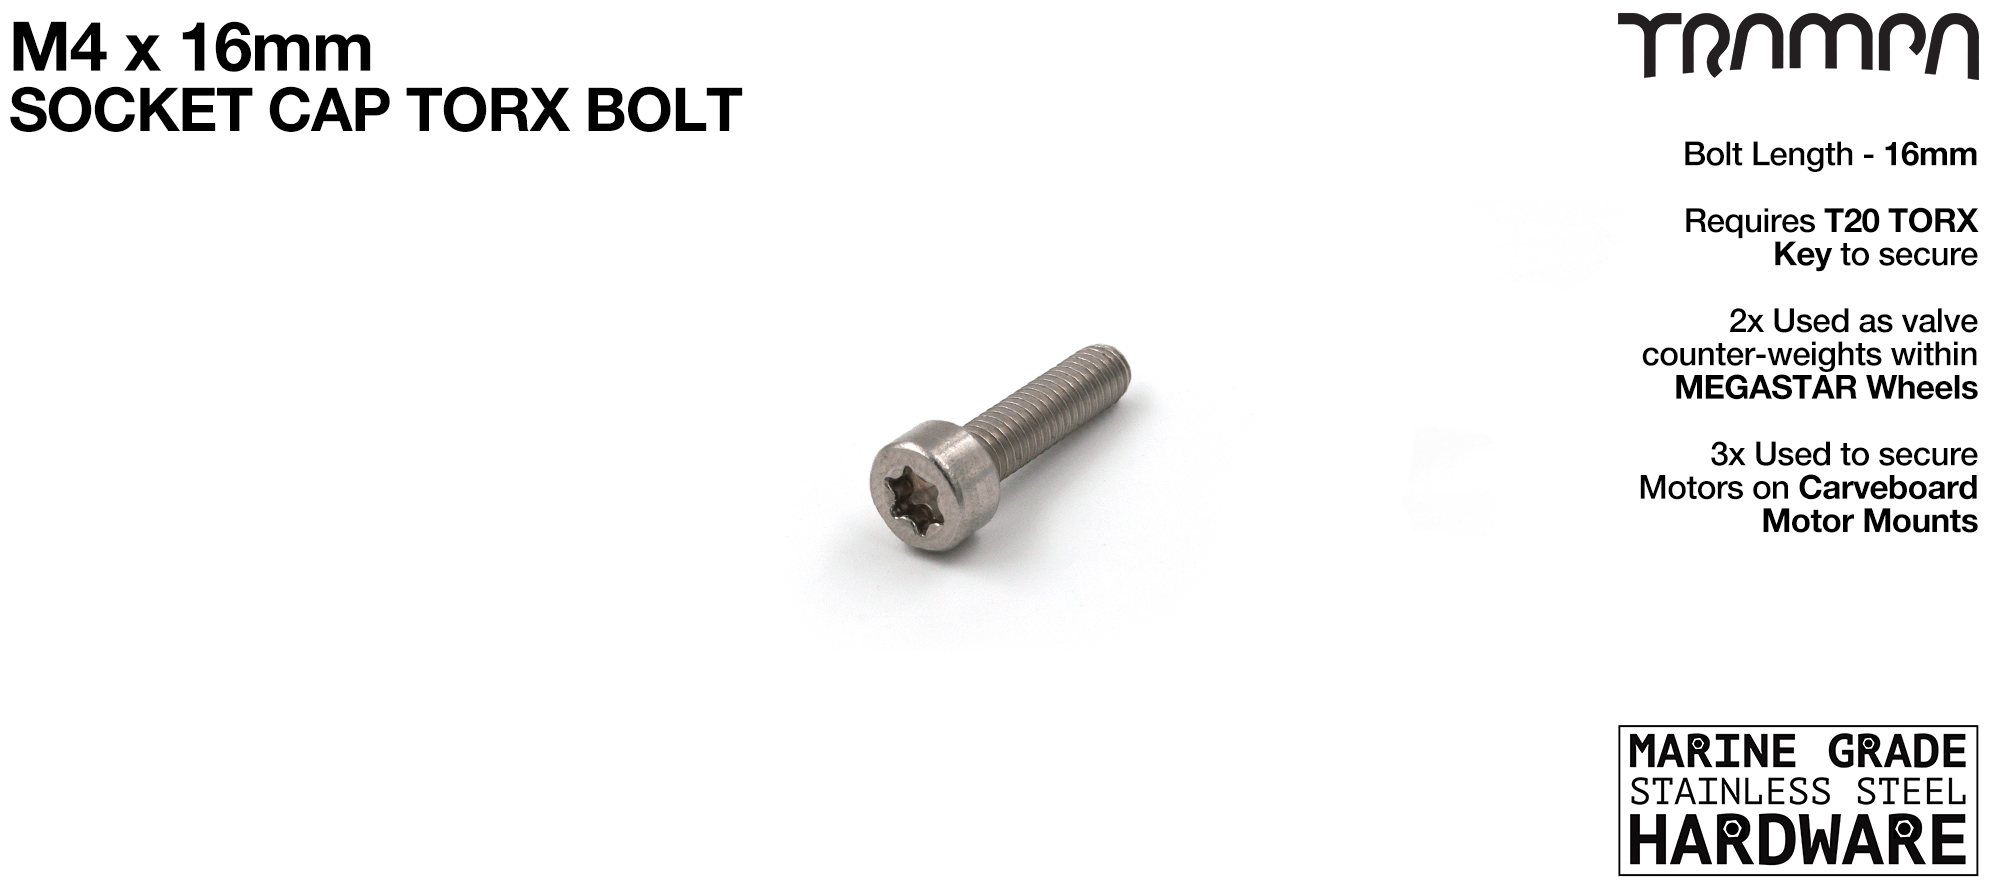 M4 x 16mm TORX Socket Capped Head Bolt ISO 4762 Marine Grade Stainless Steel